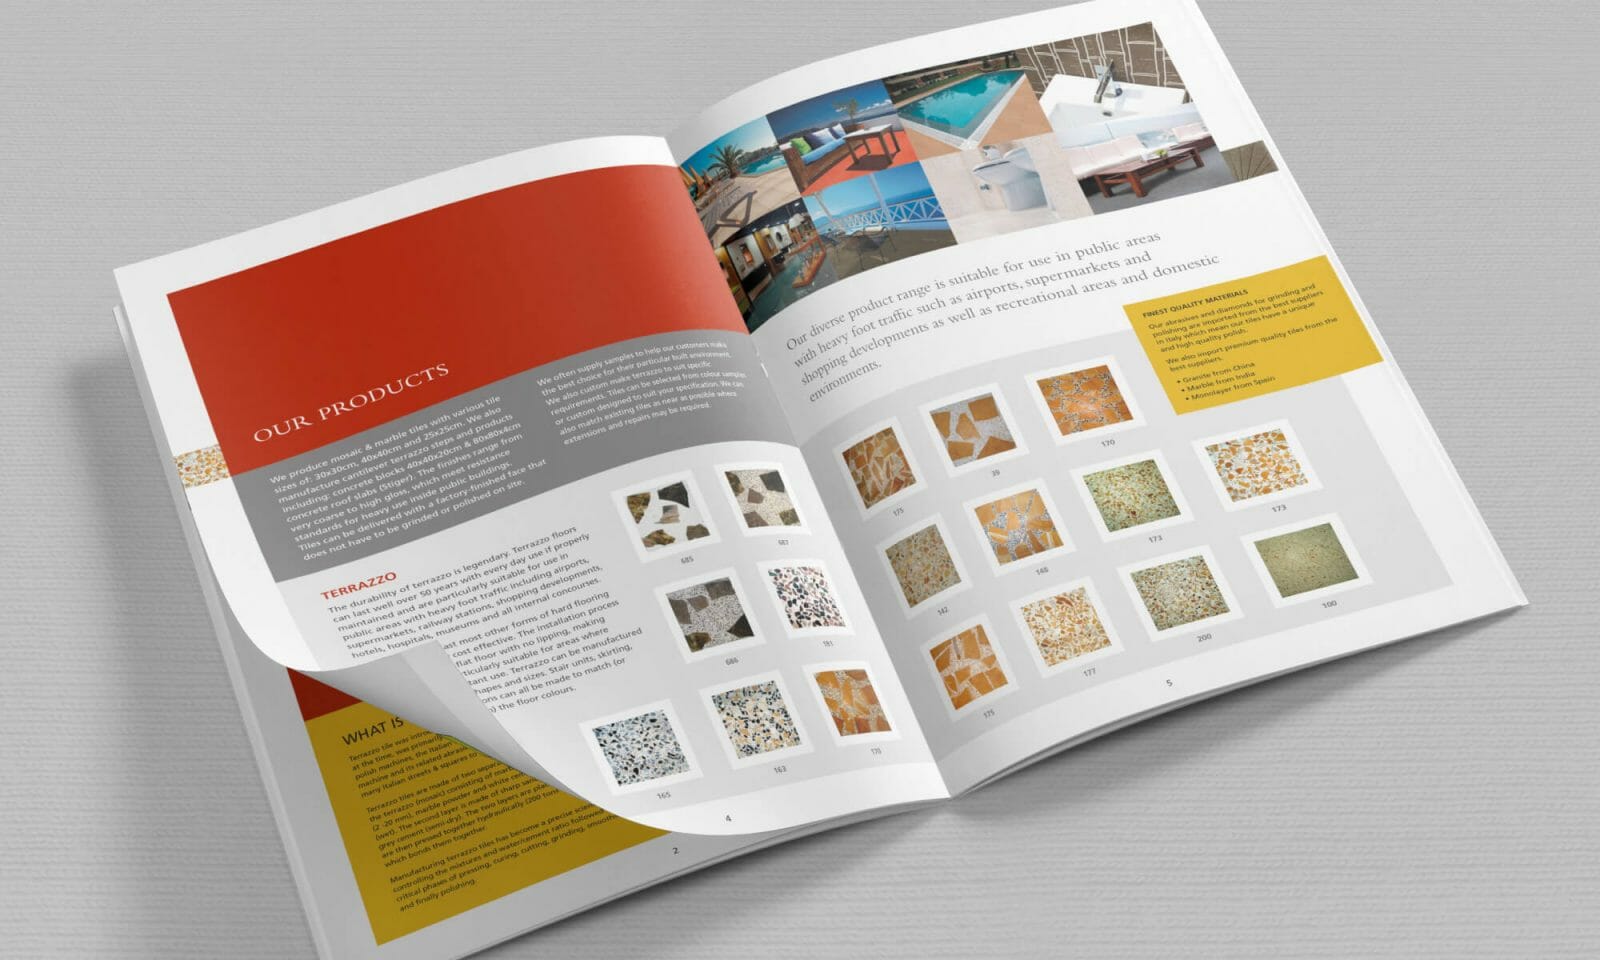 Iraqi Tiles company brochure